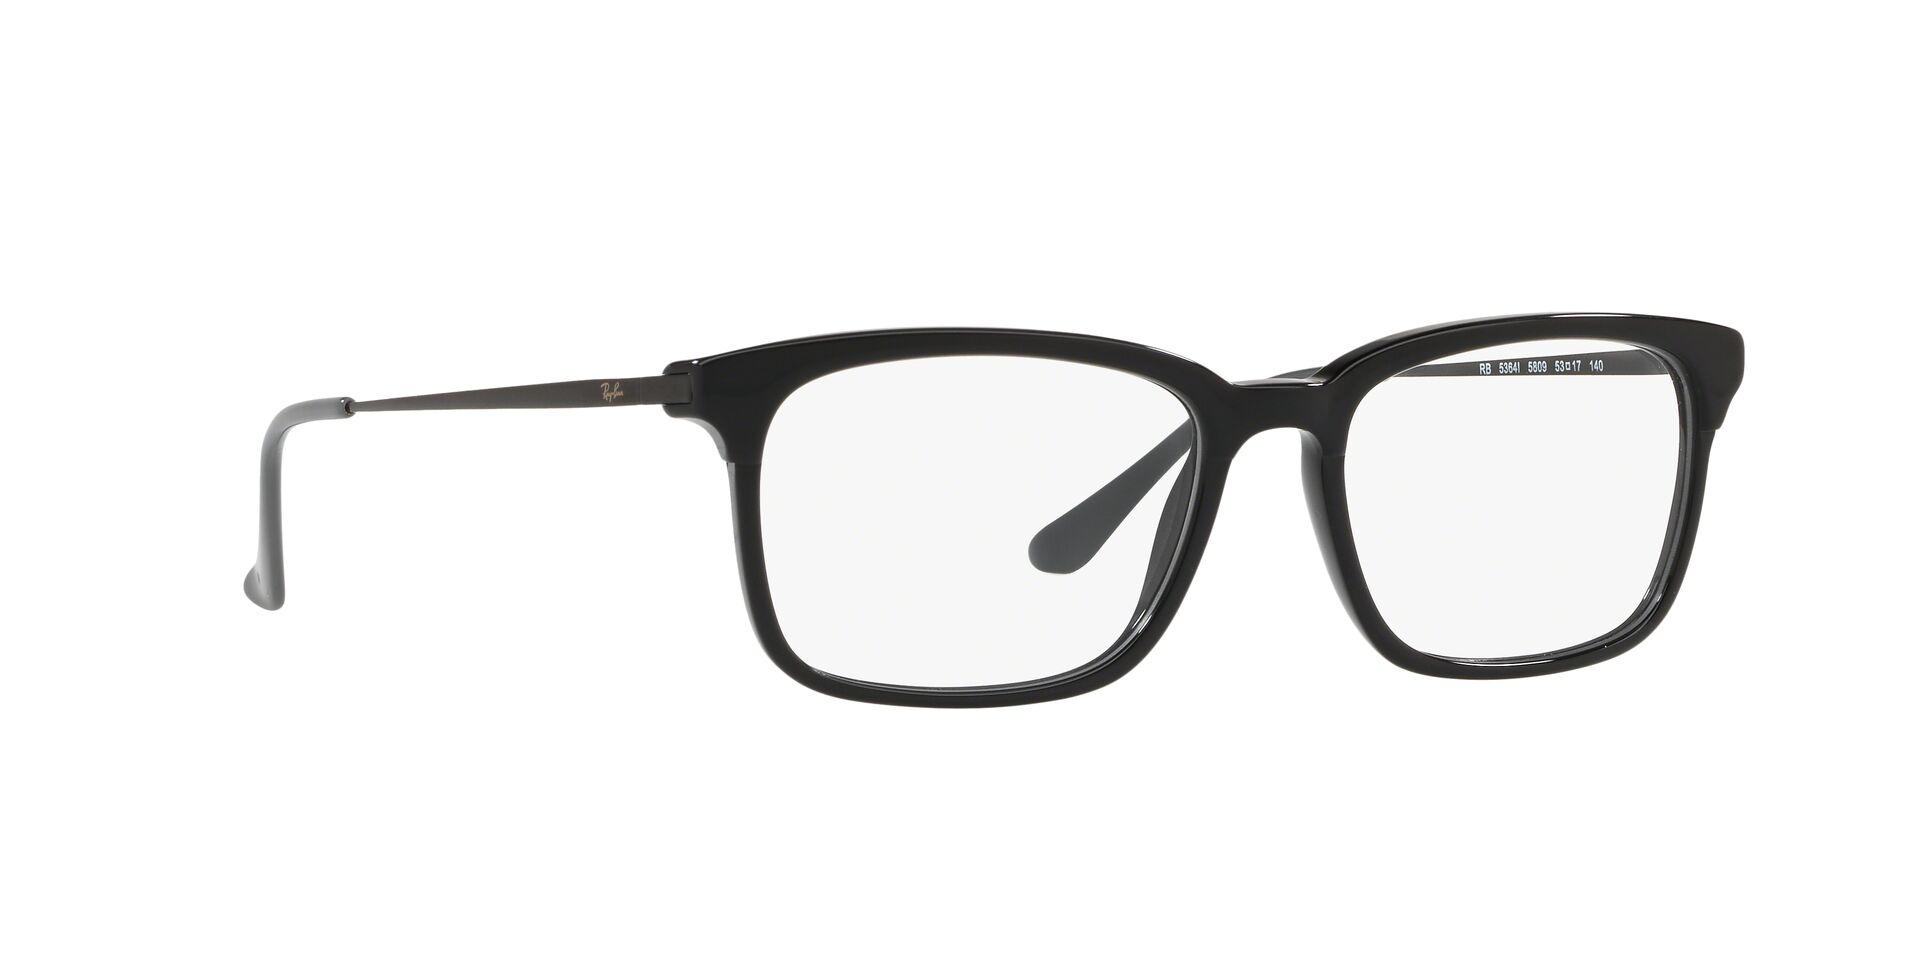 Buy Ray-Ban Rx5364 Eyeglasses Online.